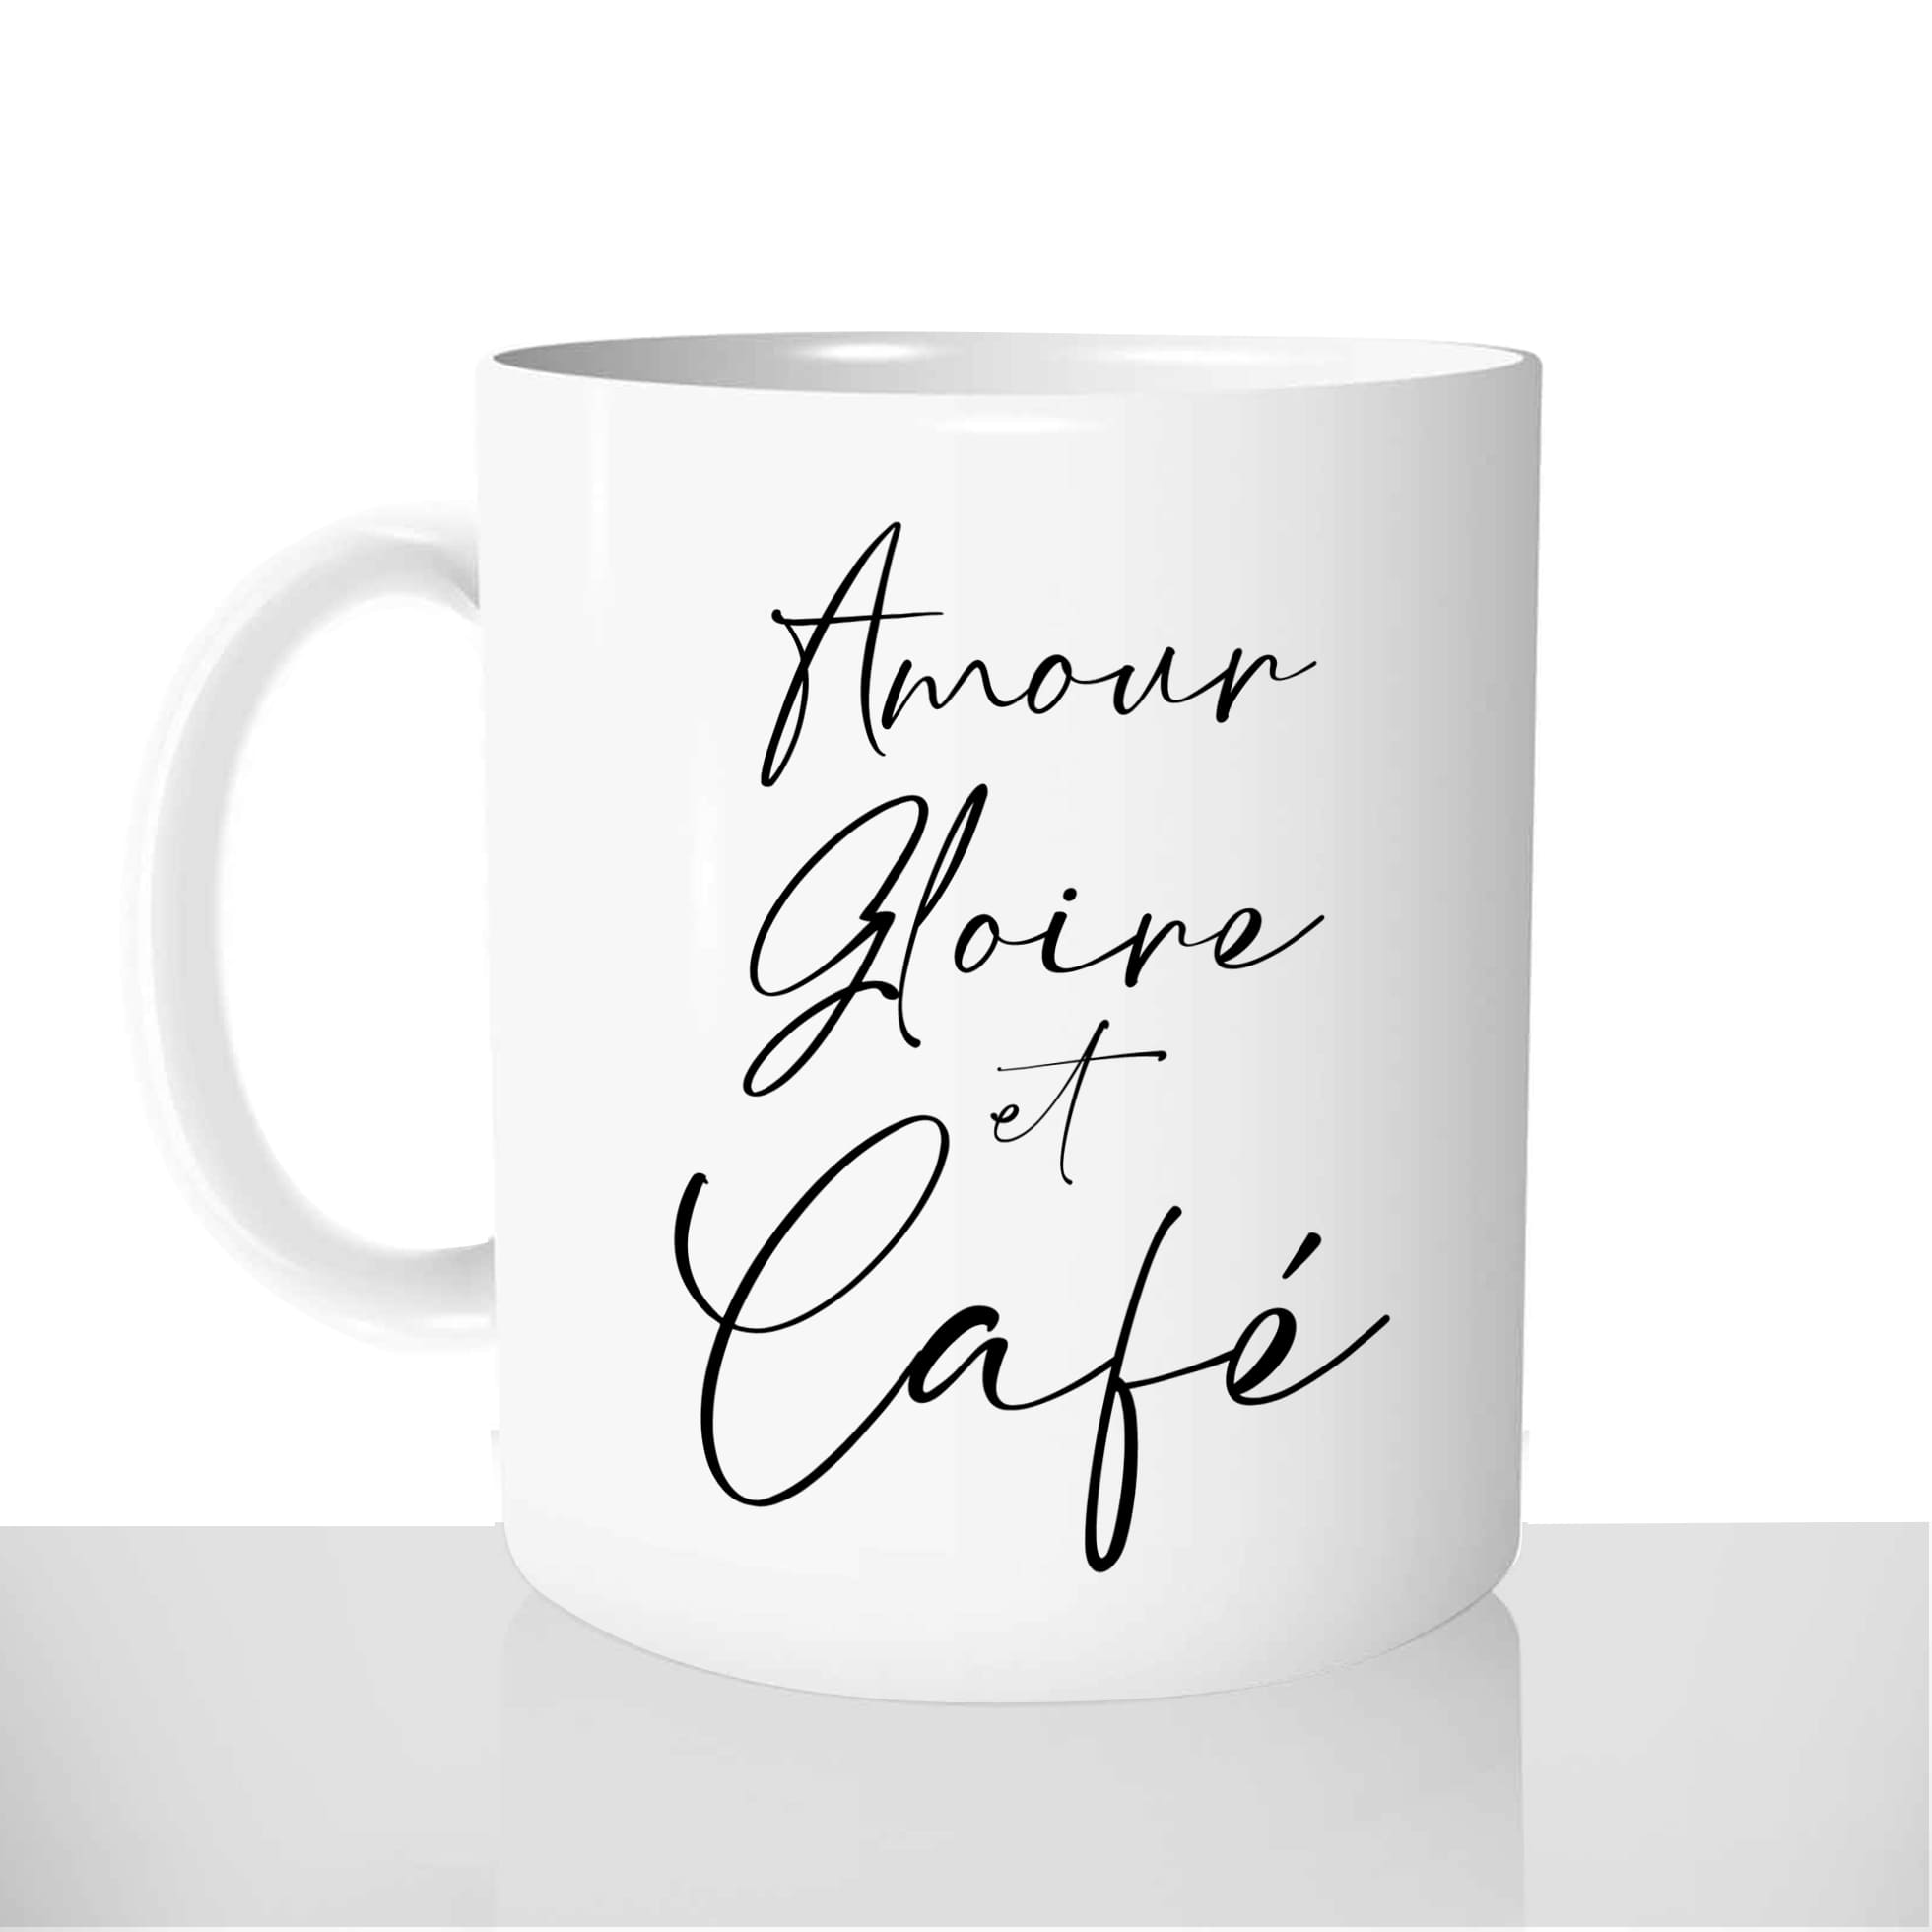 mug-blanc-brillant-personnalisé-offrir-Amour-gloire-café-thé-coffee-matin-reveil-gourmand-fun-personnalisable-idée-cadeau-original